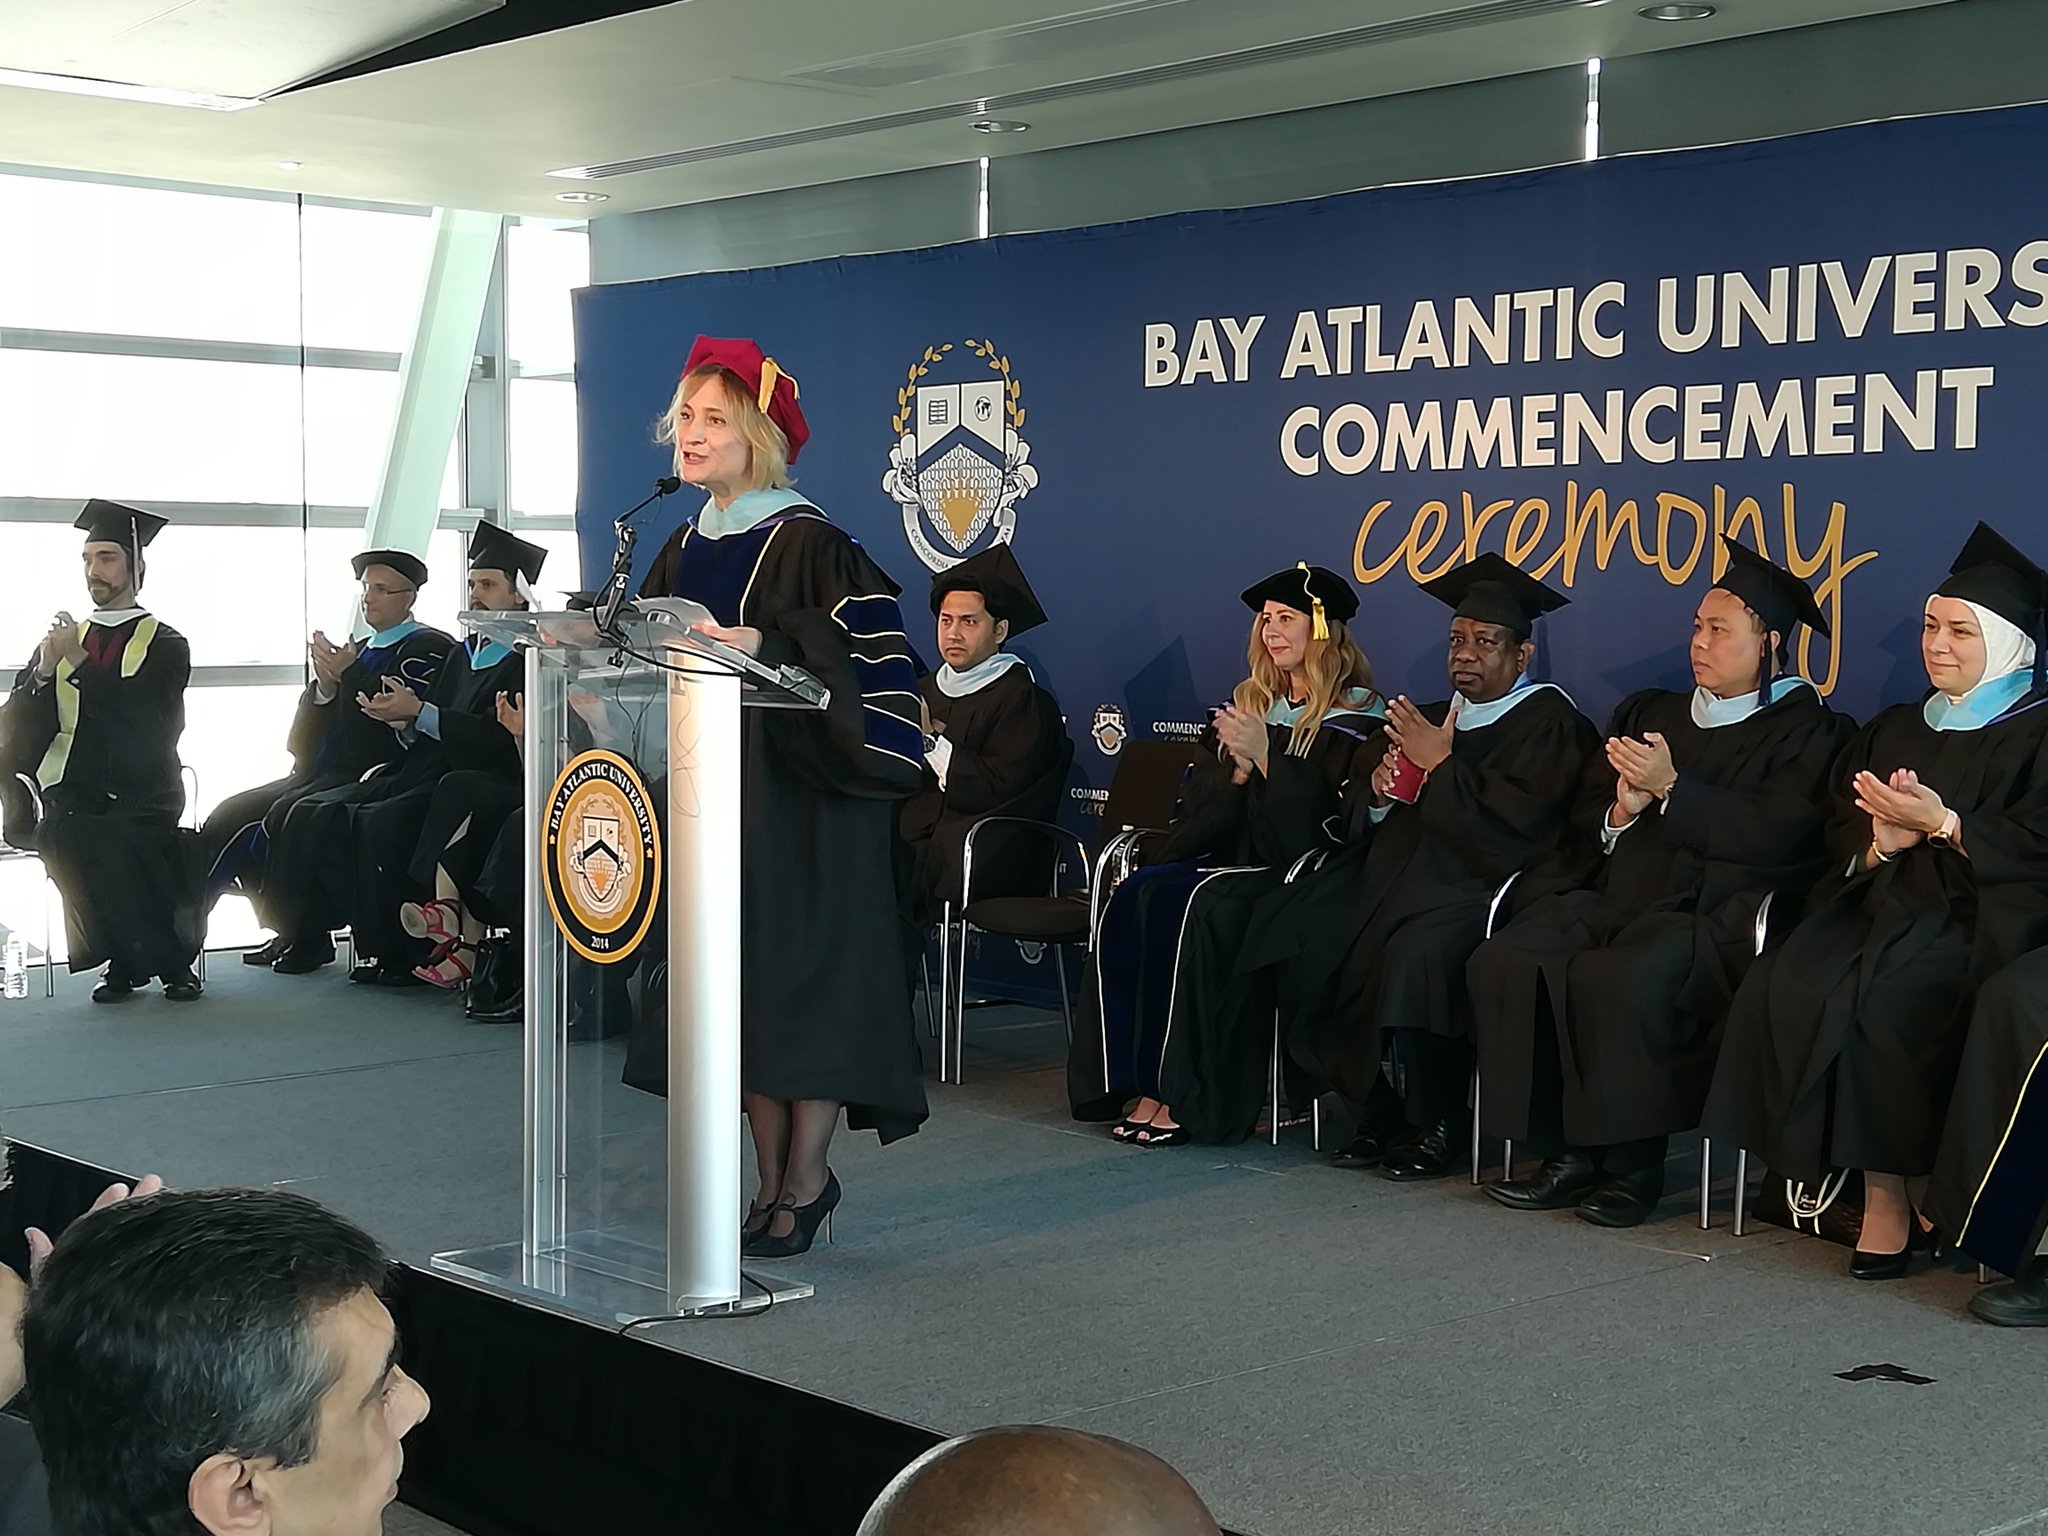 Bay Atlantic University on Twitter: "The BAU President @sinemisv and  Faculty members congratulate the graduates. #baugrad #BAUcommencement  #graduation2019 https://t.co/IZZrmVDgdz" / Twitter